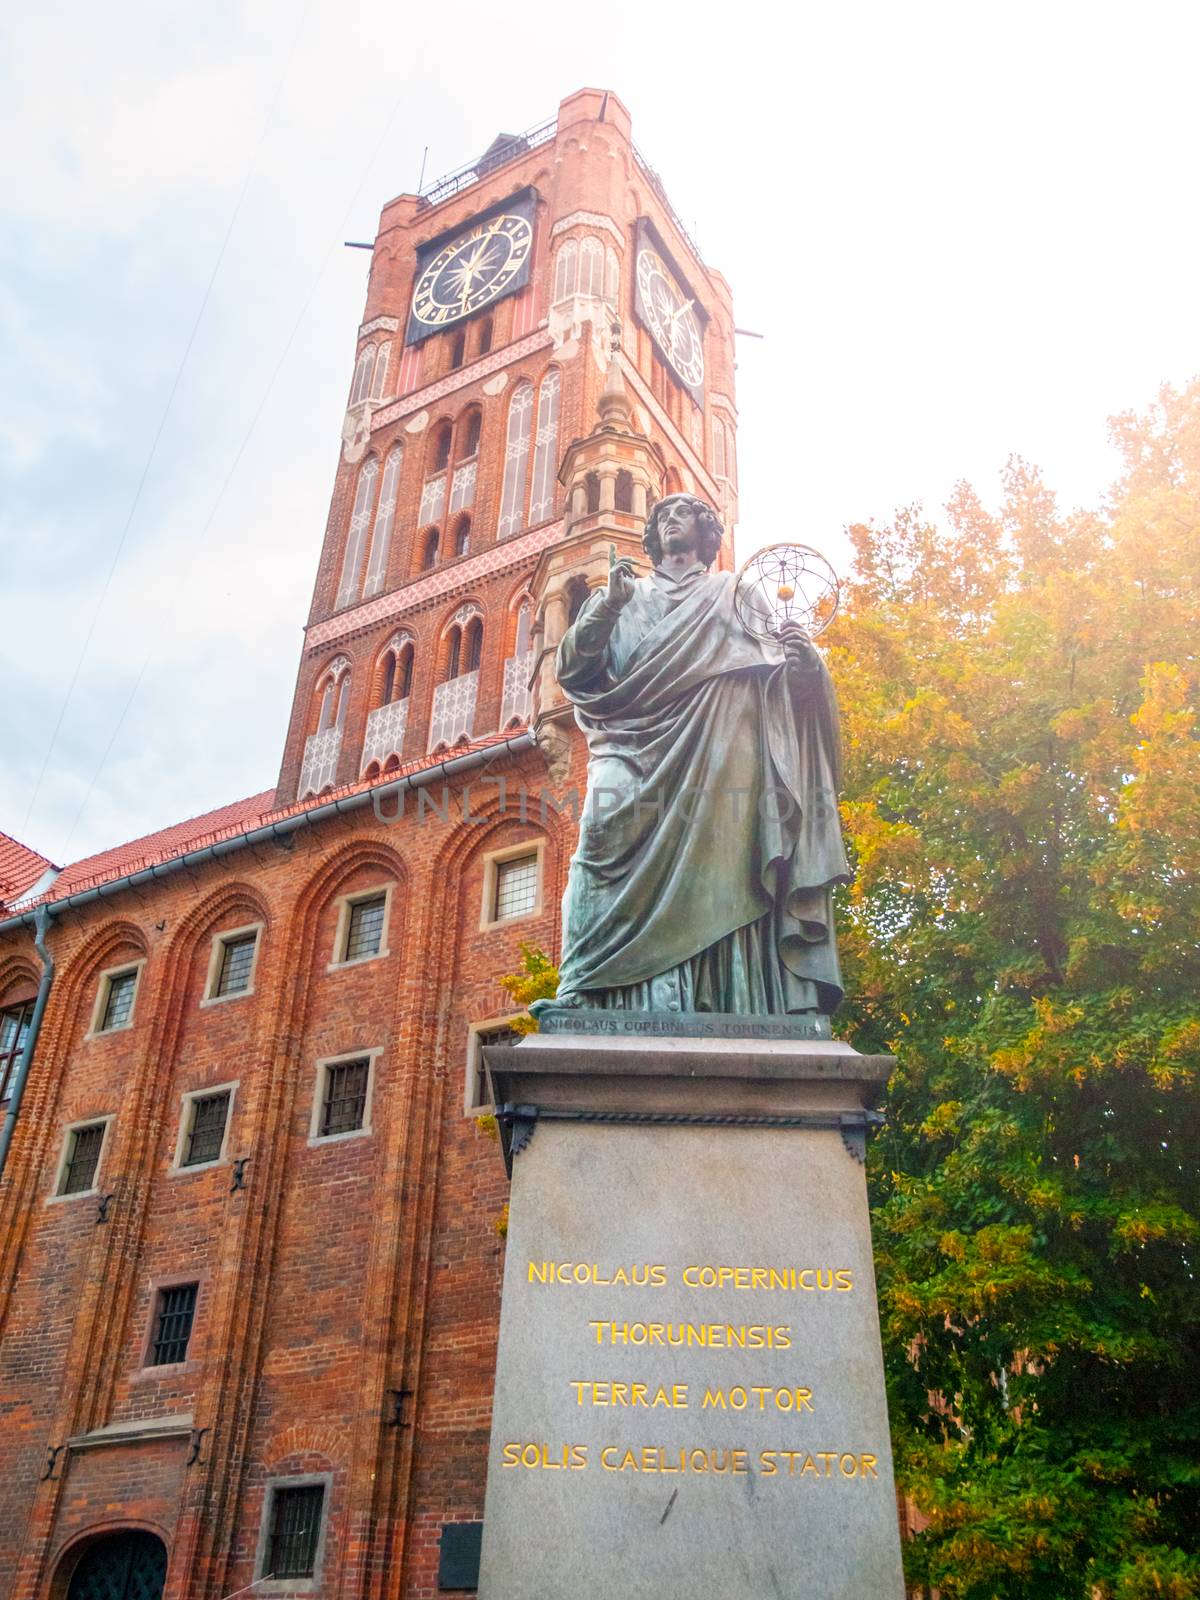 TORUN, POLAND - AUGUST 27, 2014: Statue of Nicolaus Copernicus, Renaissance mathematician and astronomer, in Torun Poland